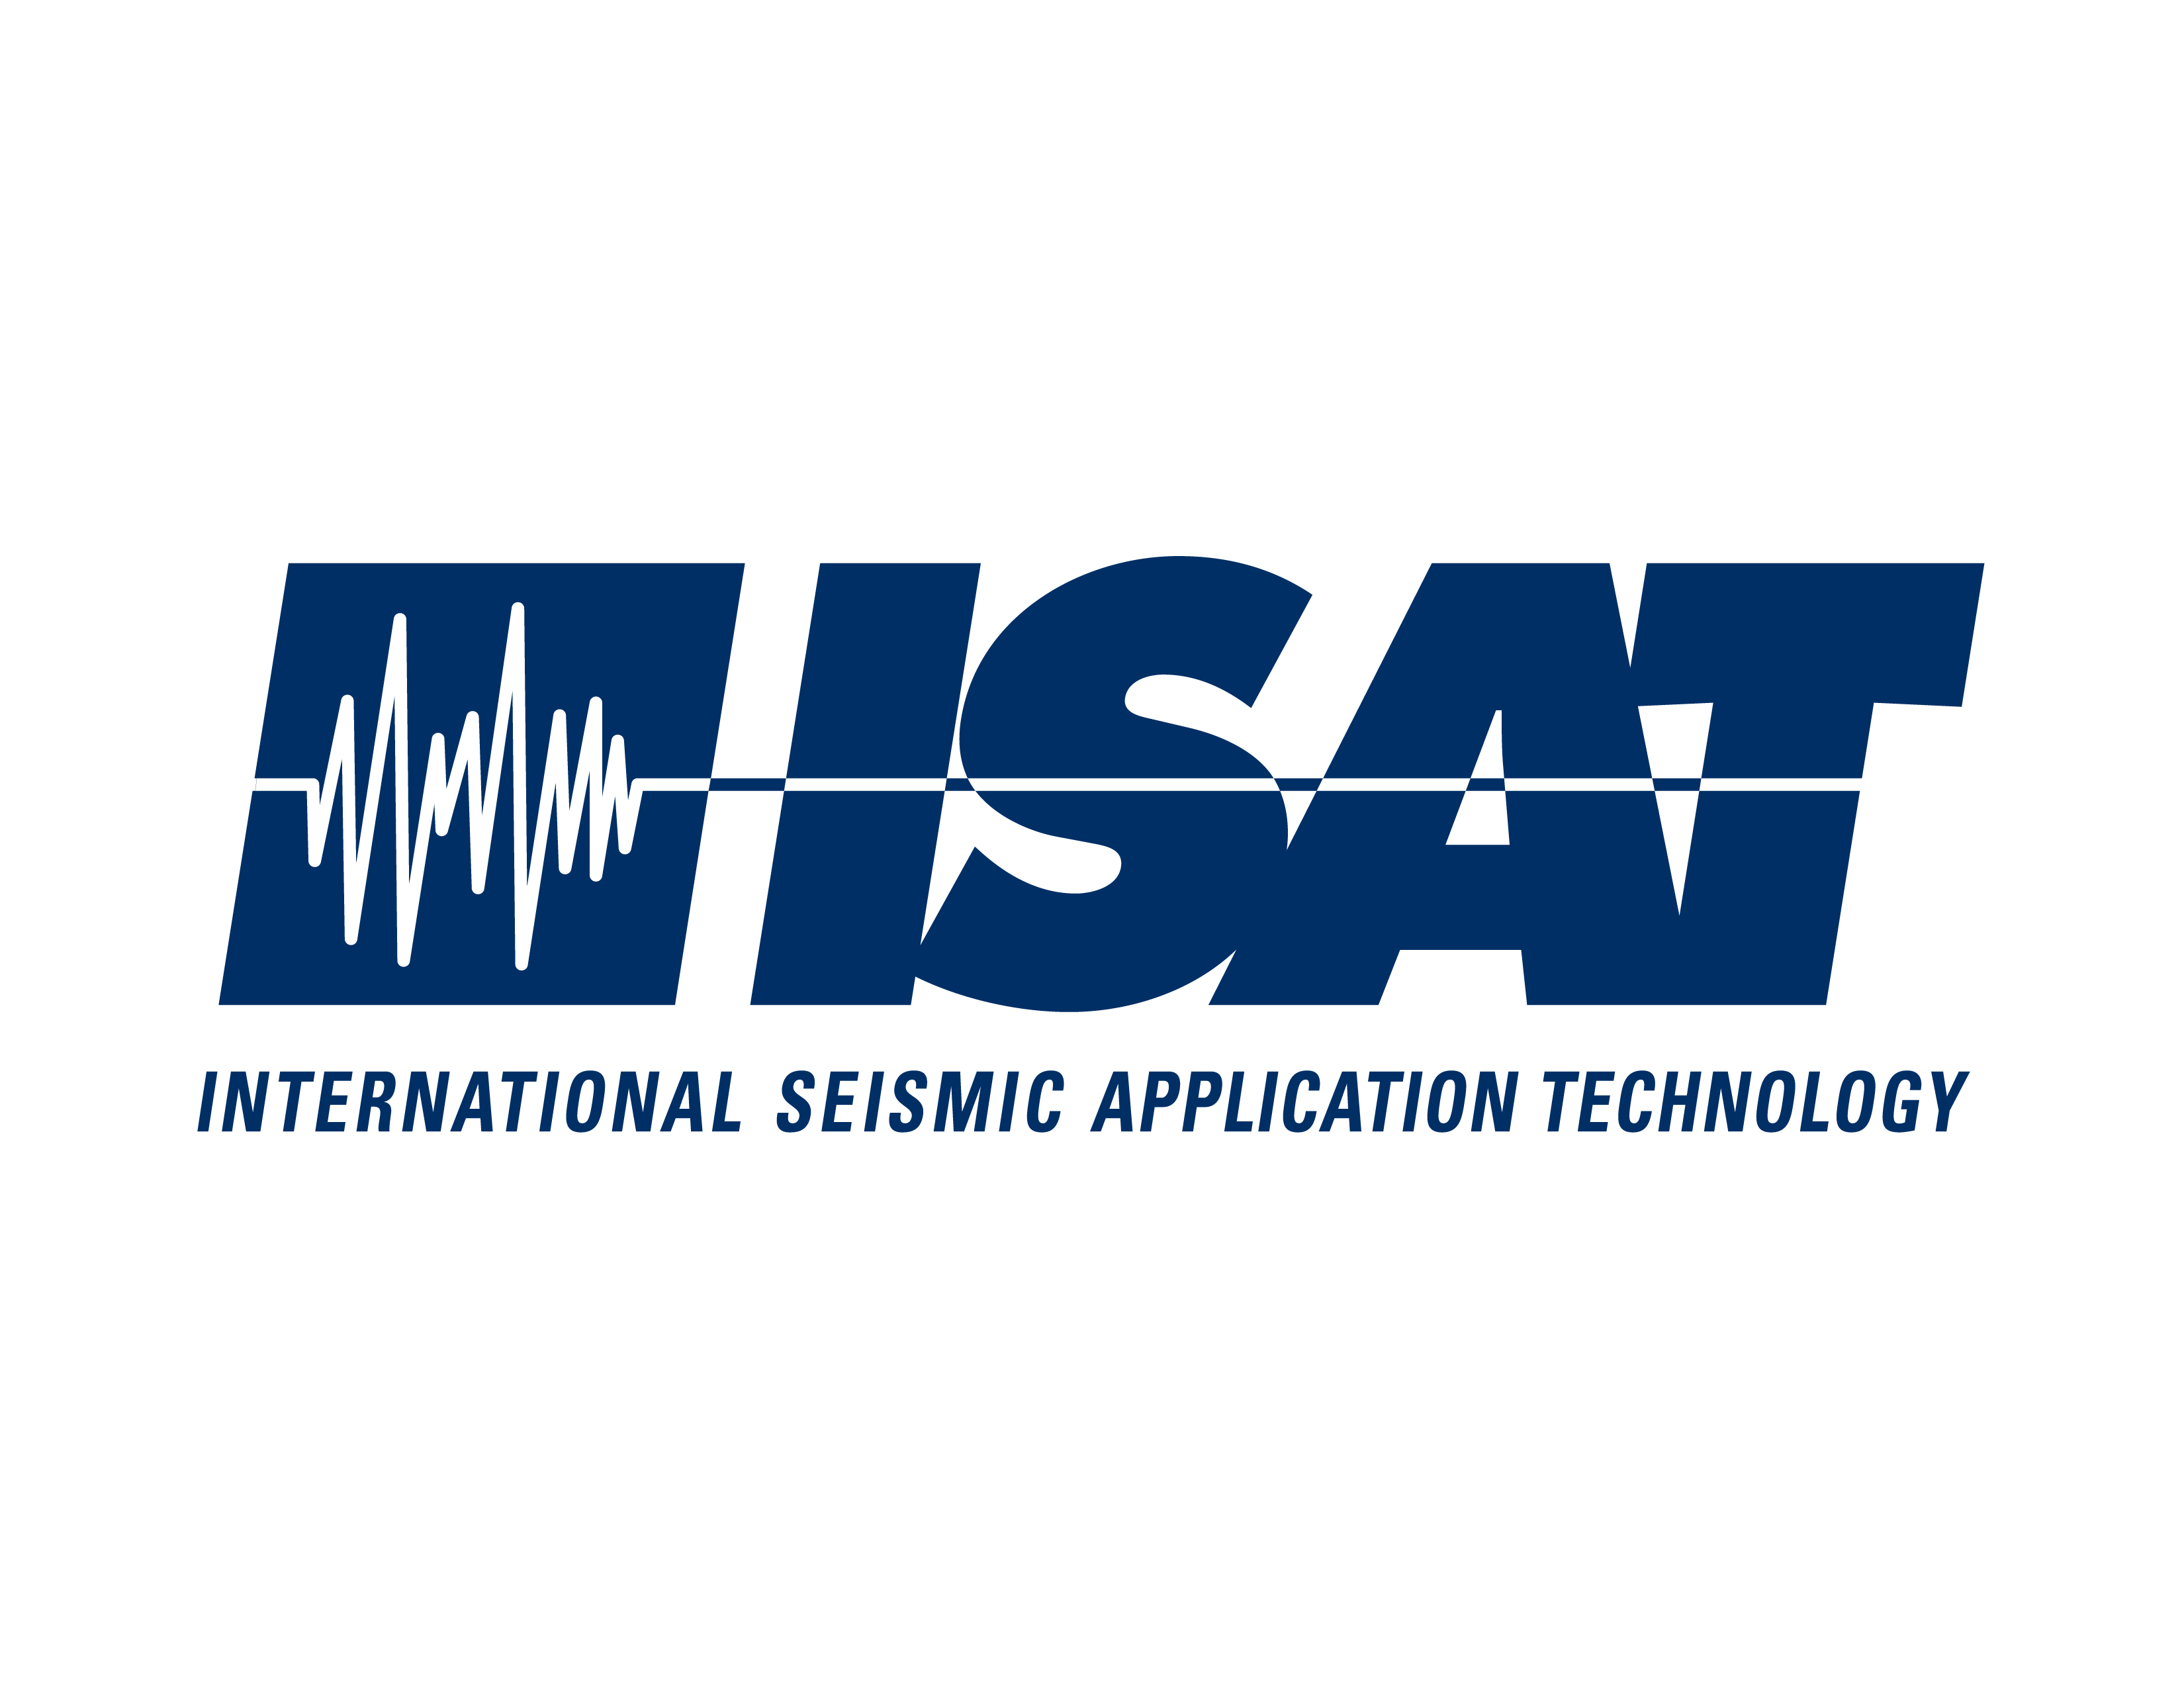 International Seismic Application Technology